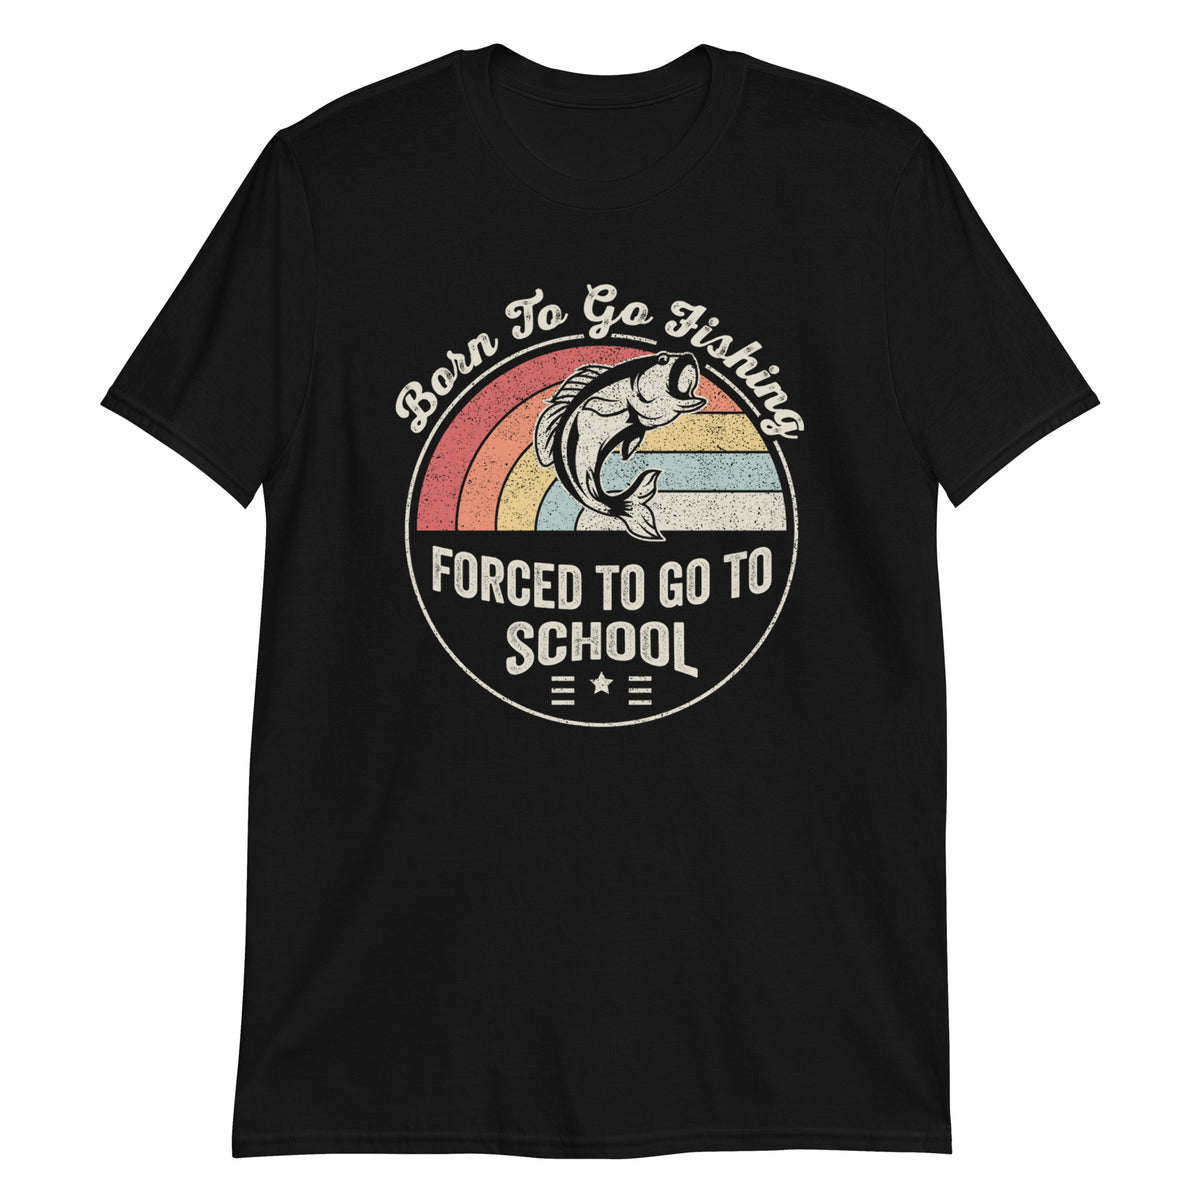 Born To Go Fishing Retro Vintage Fishing Funny T-Shirt